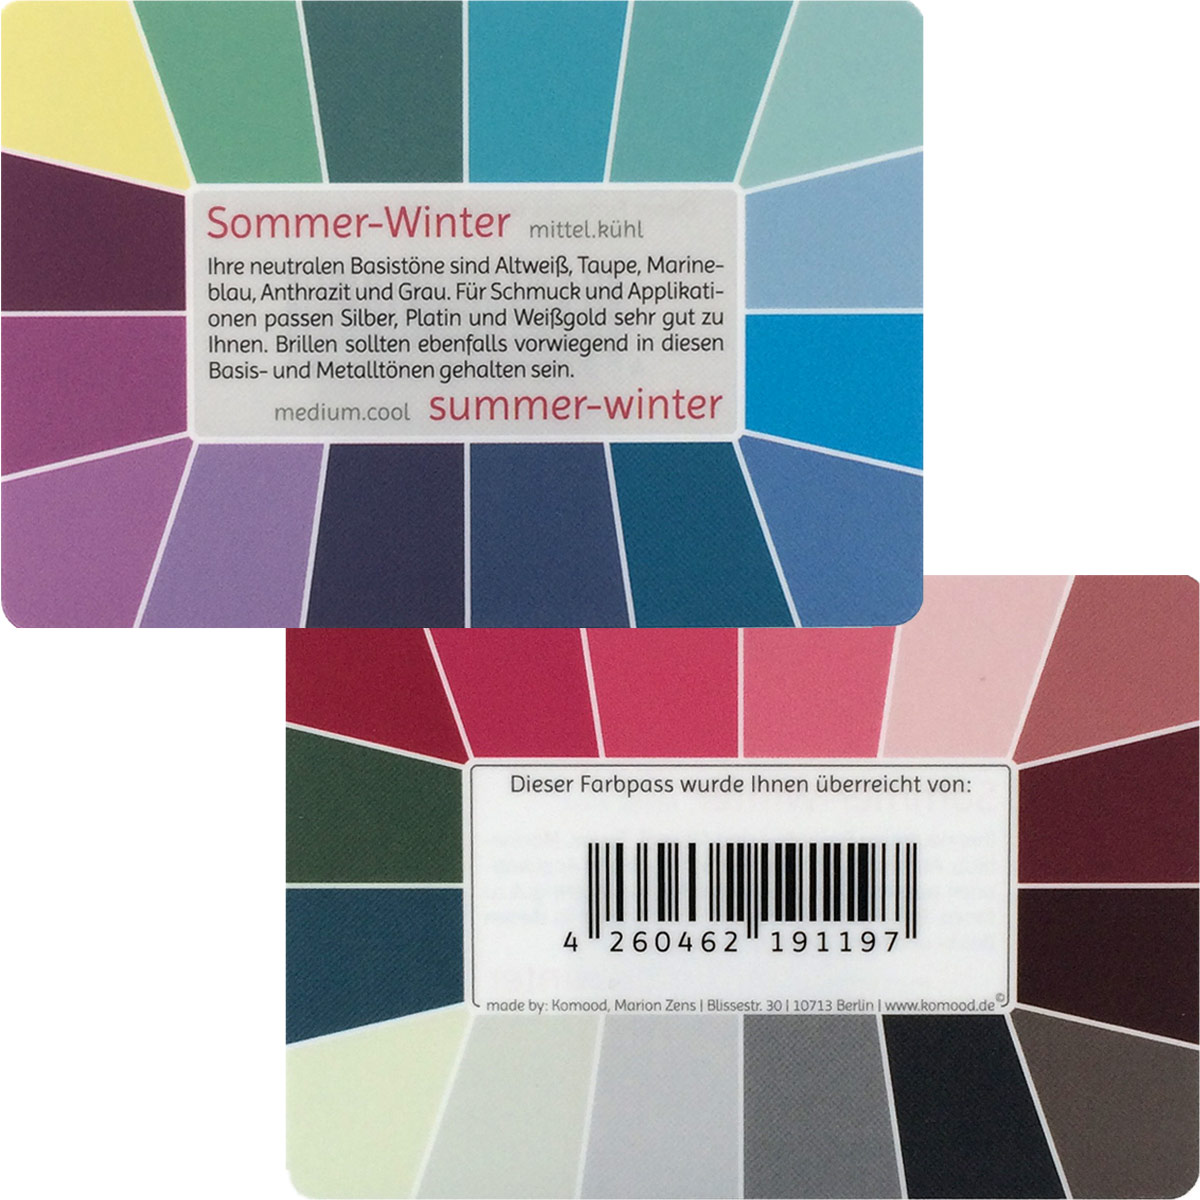 Farbpass Sommer-Winter - Memo, 32 Farben